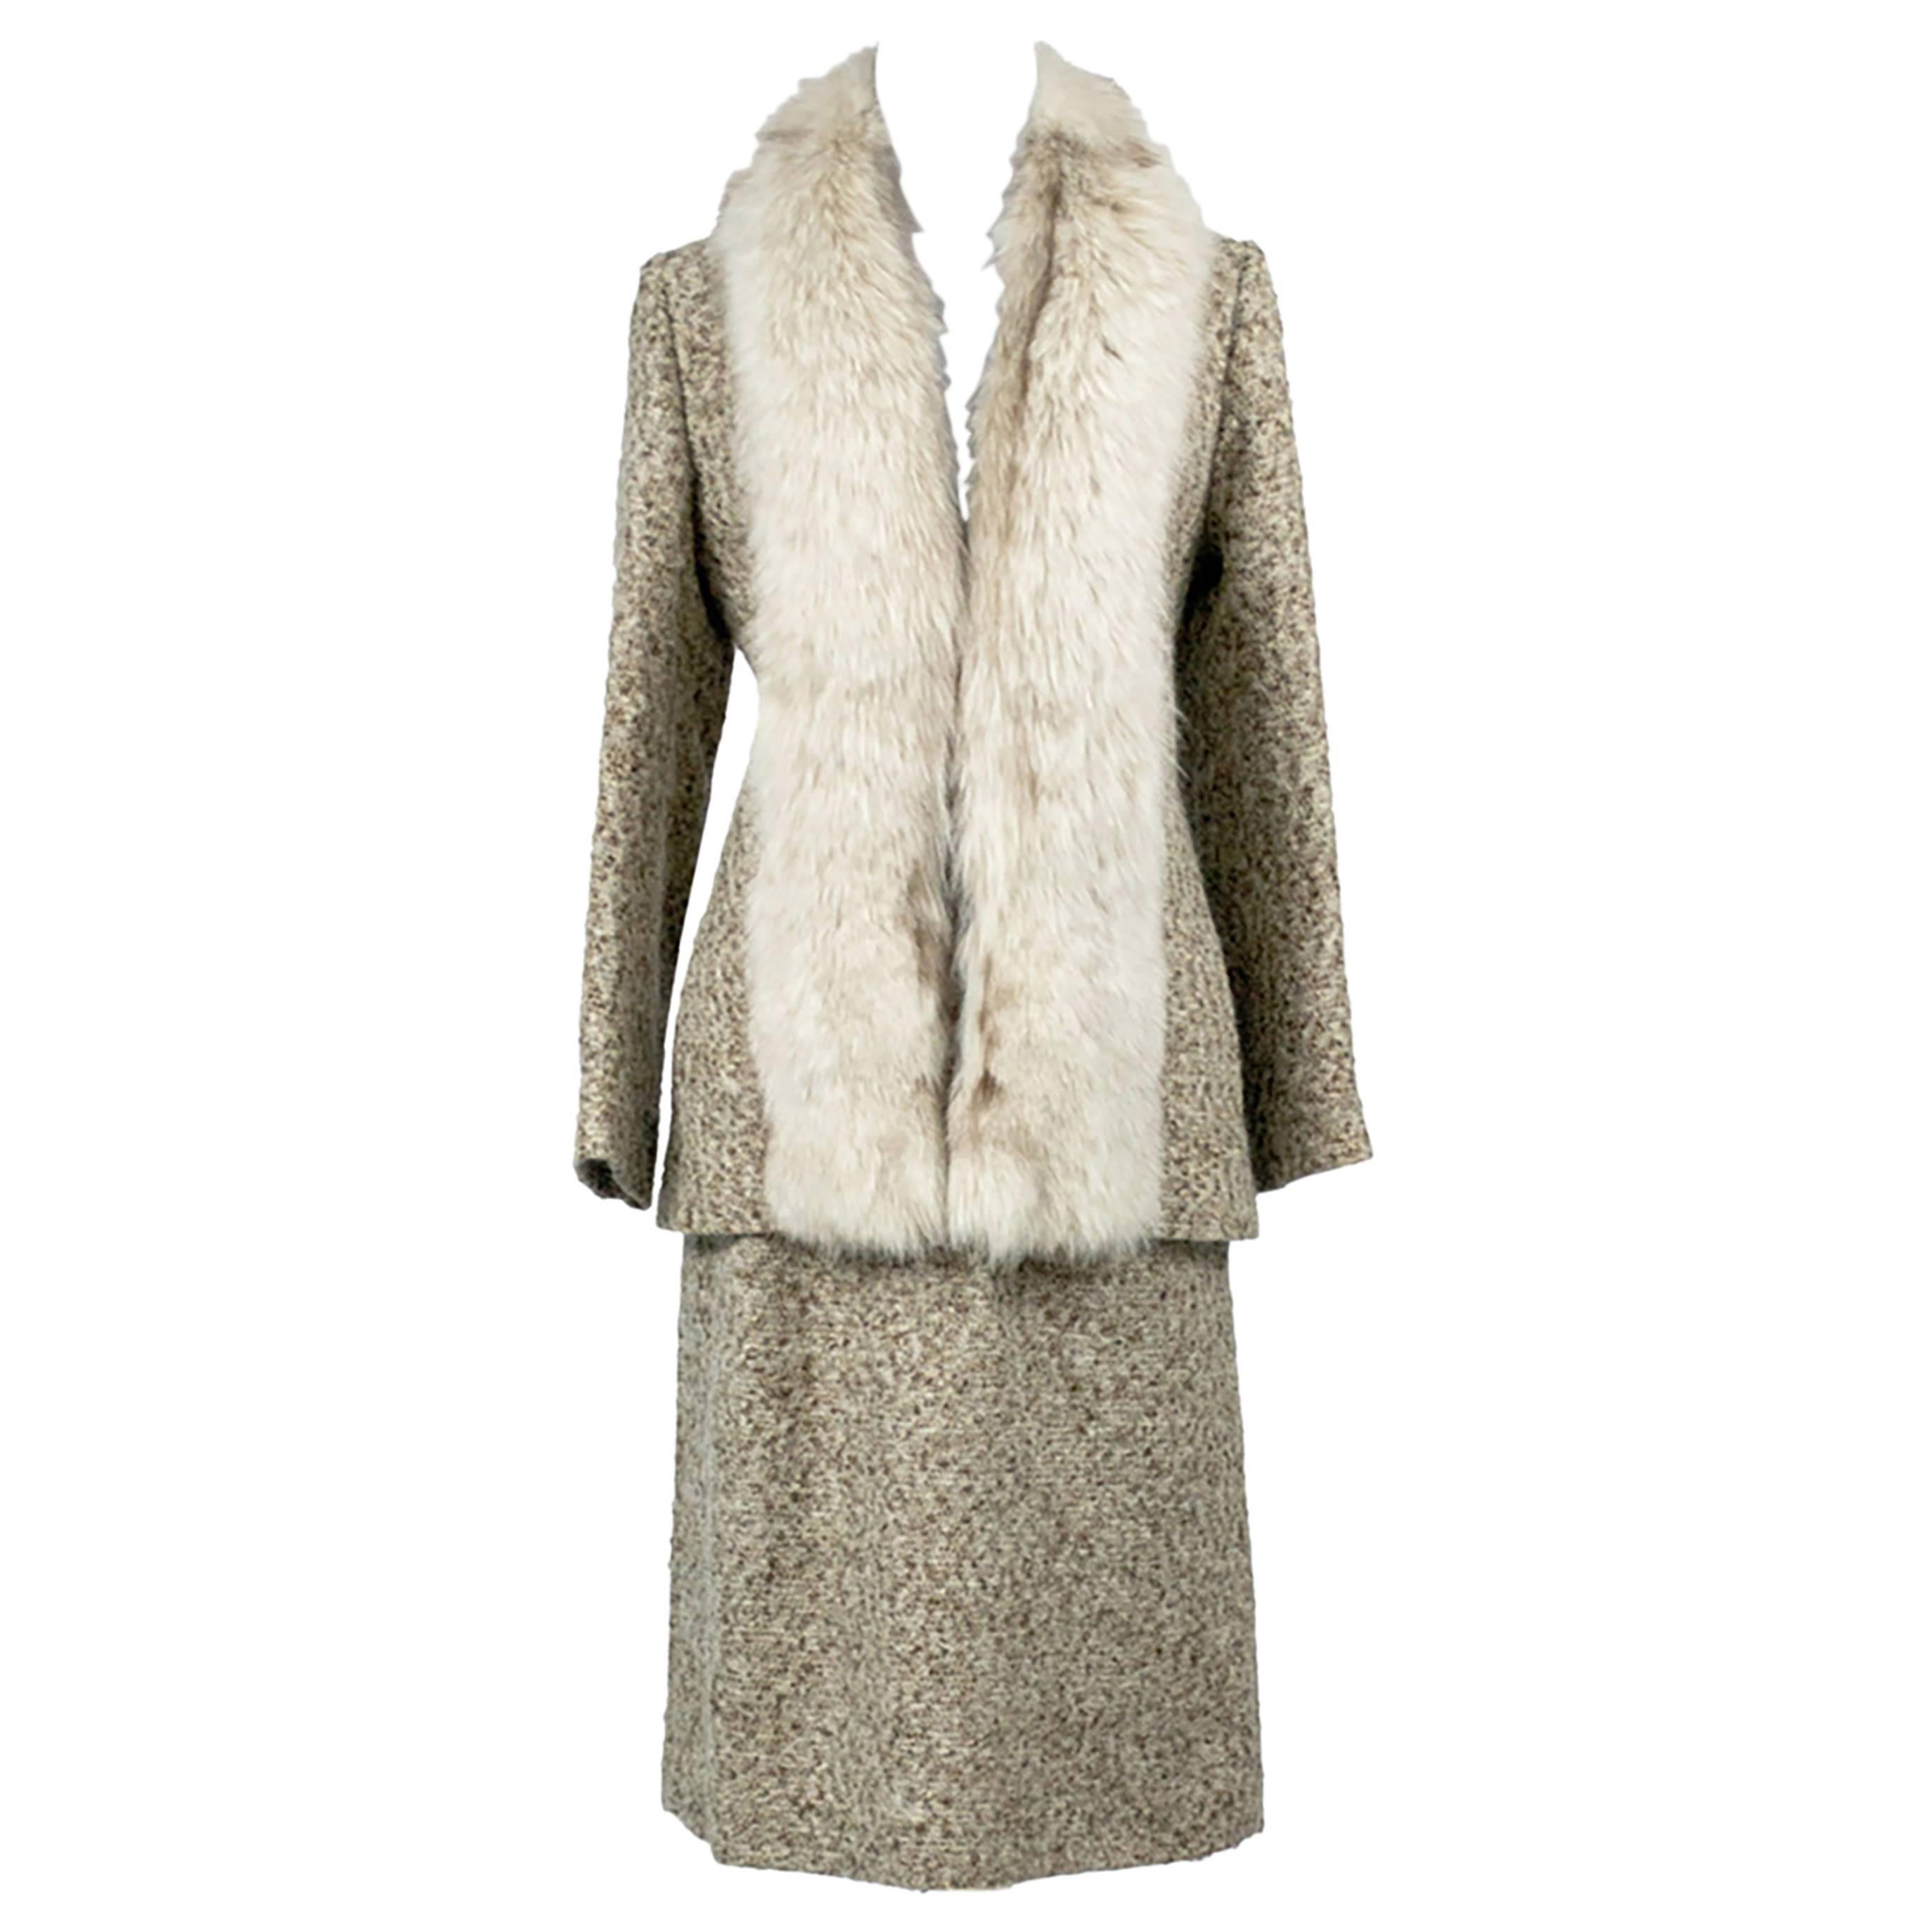 1970s Lilli Ann Vintage Tweed Skirt Suit W Fox Fur Trimmed Long Jacket